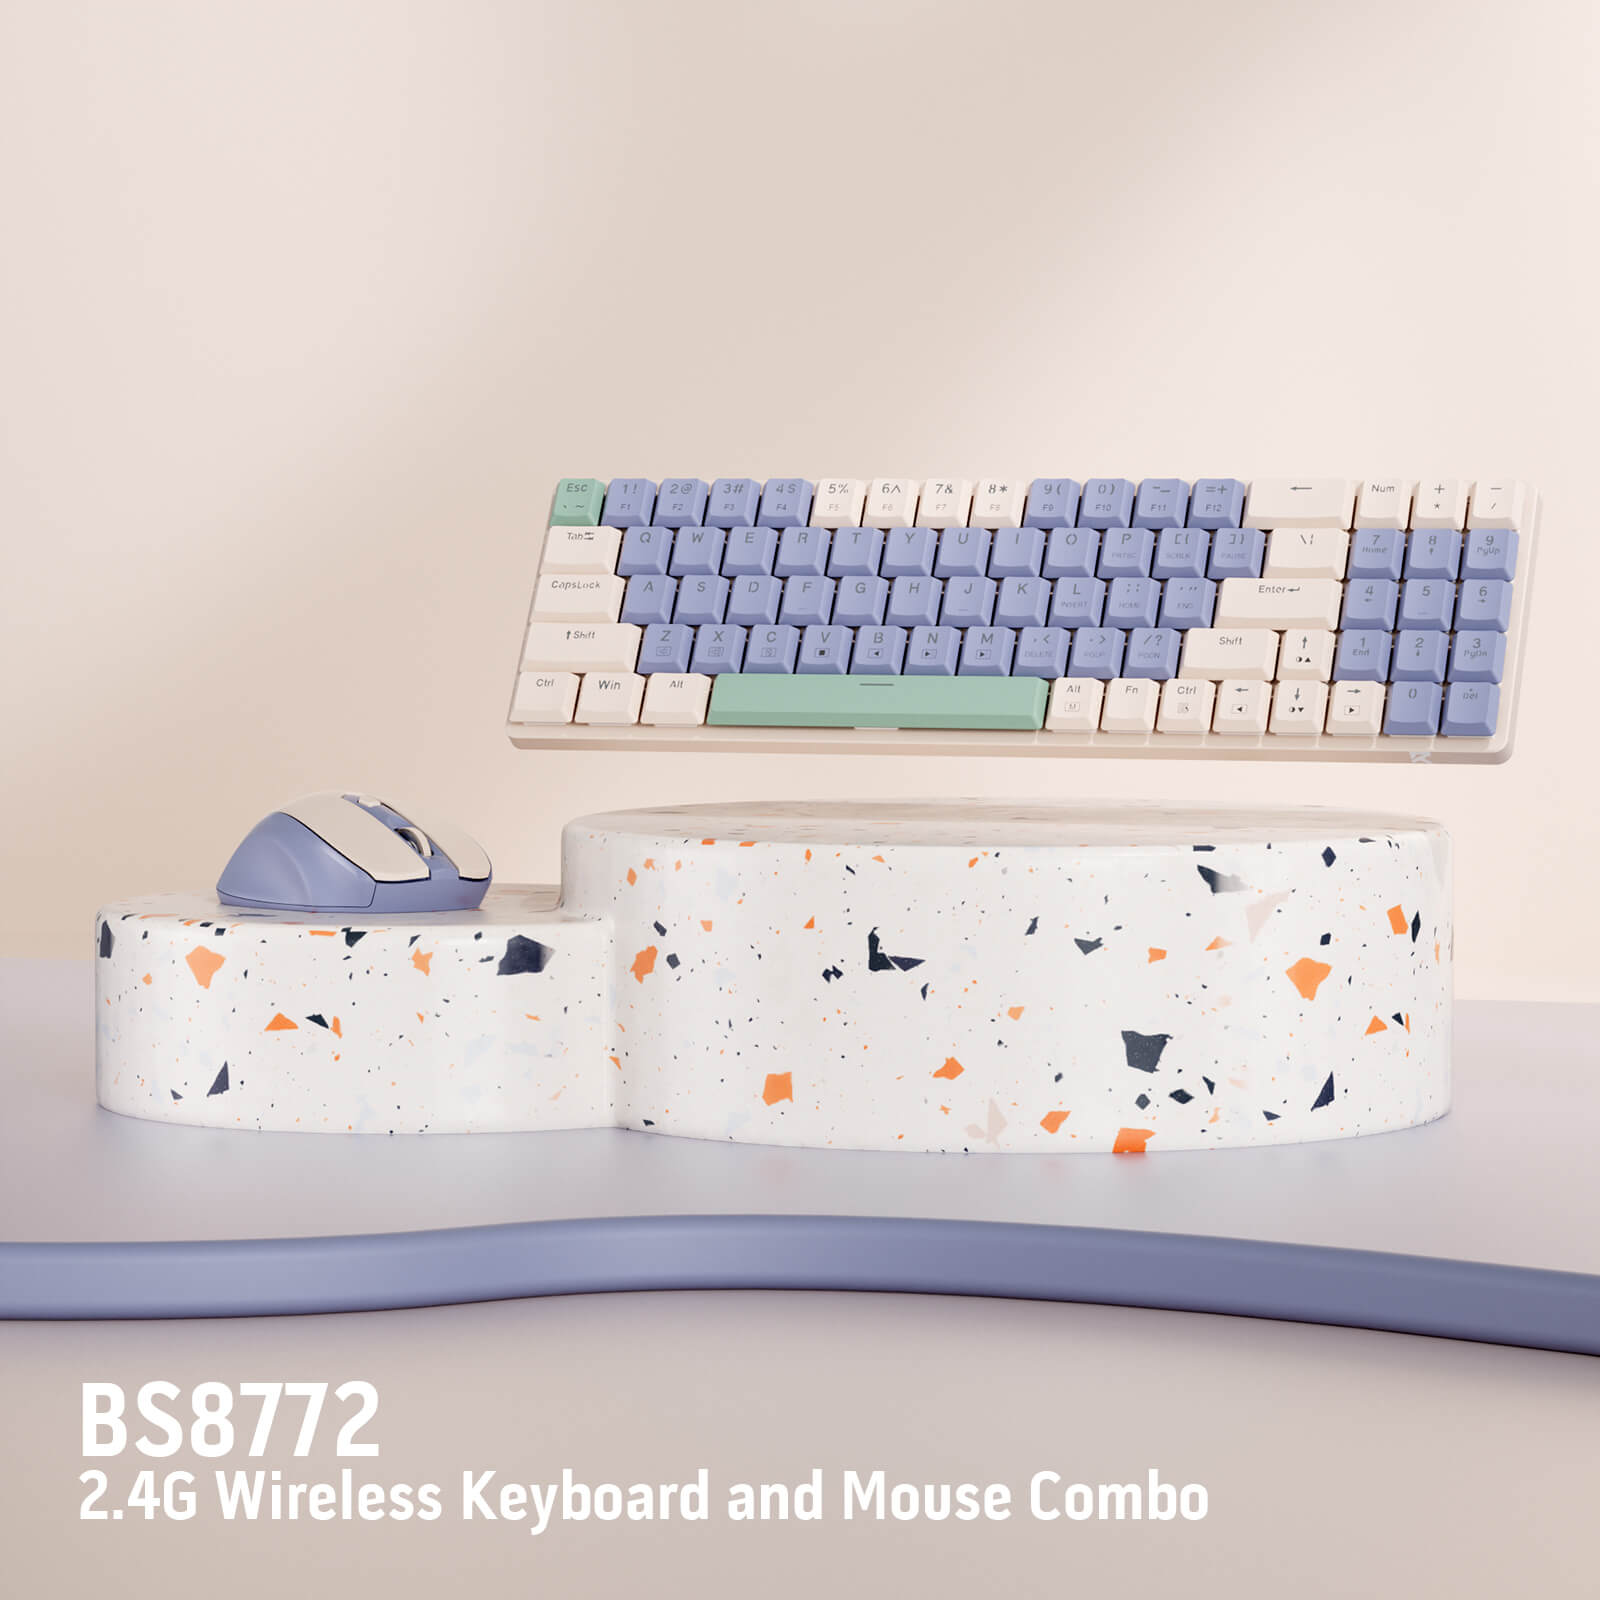 Redragon BS8772 Wireless Keyboard and Mouse Combo, 75% 78 Keys 2.4Ghz Wireless Low-Profile Mechanical Keyboard w/Rechargeable Battery, Single Blue Blacklight, 2400 DPI Ergonomic Mouse